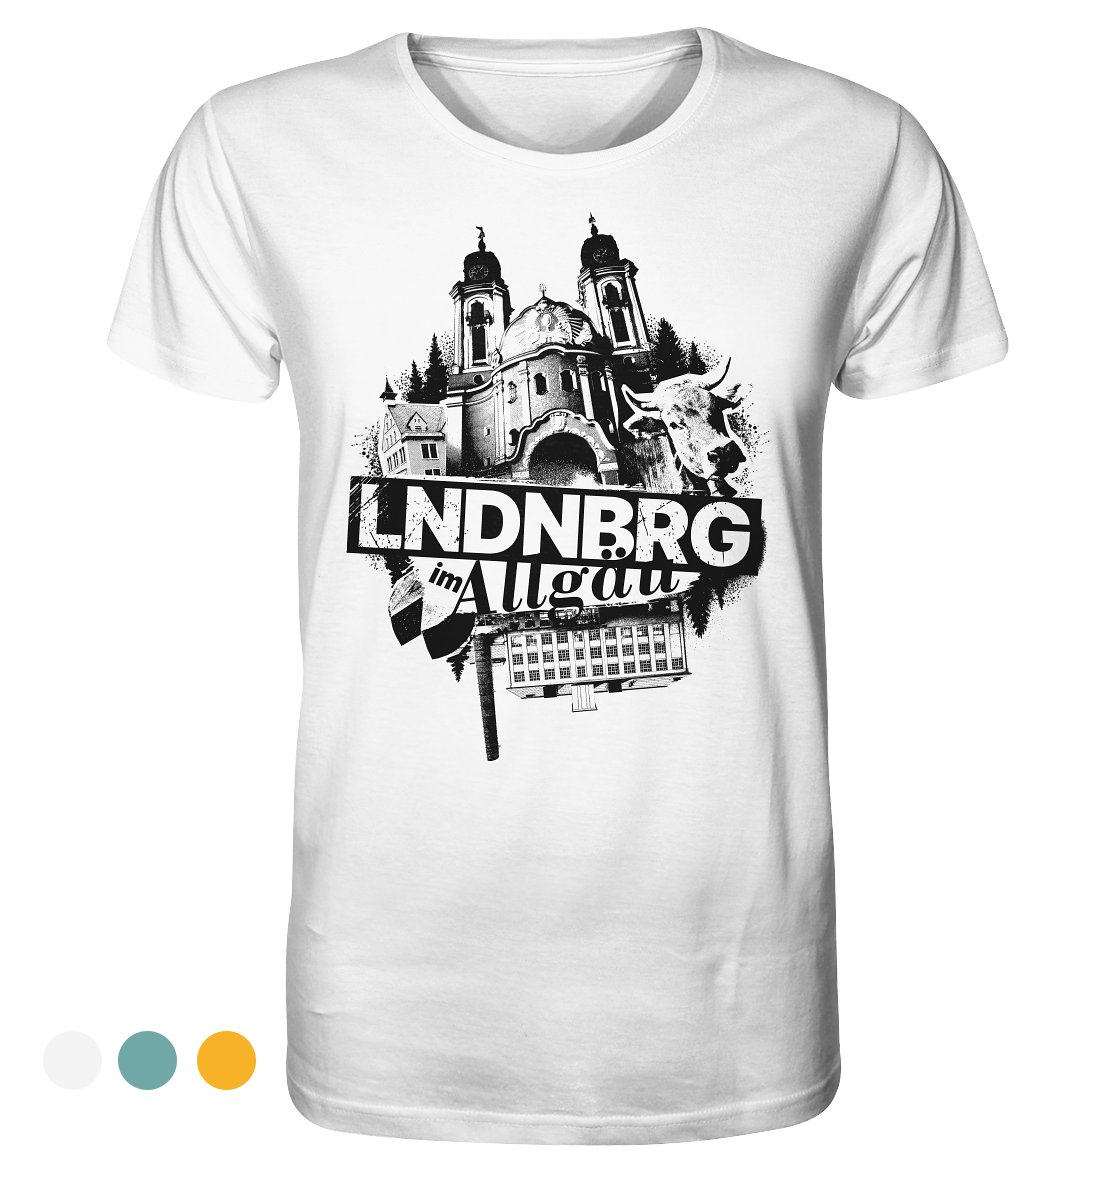 LNDNBRG - Organic Shirt